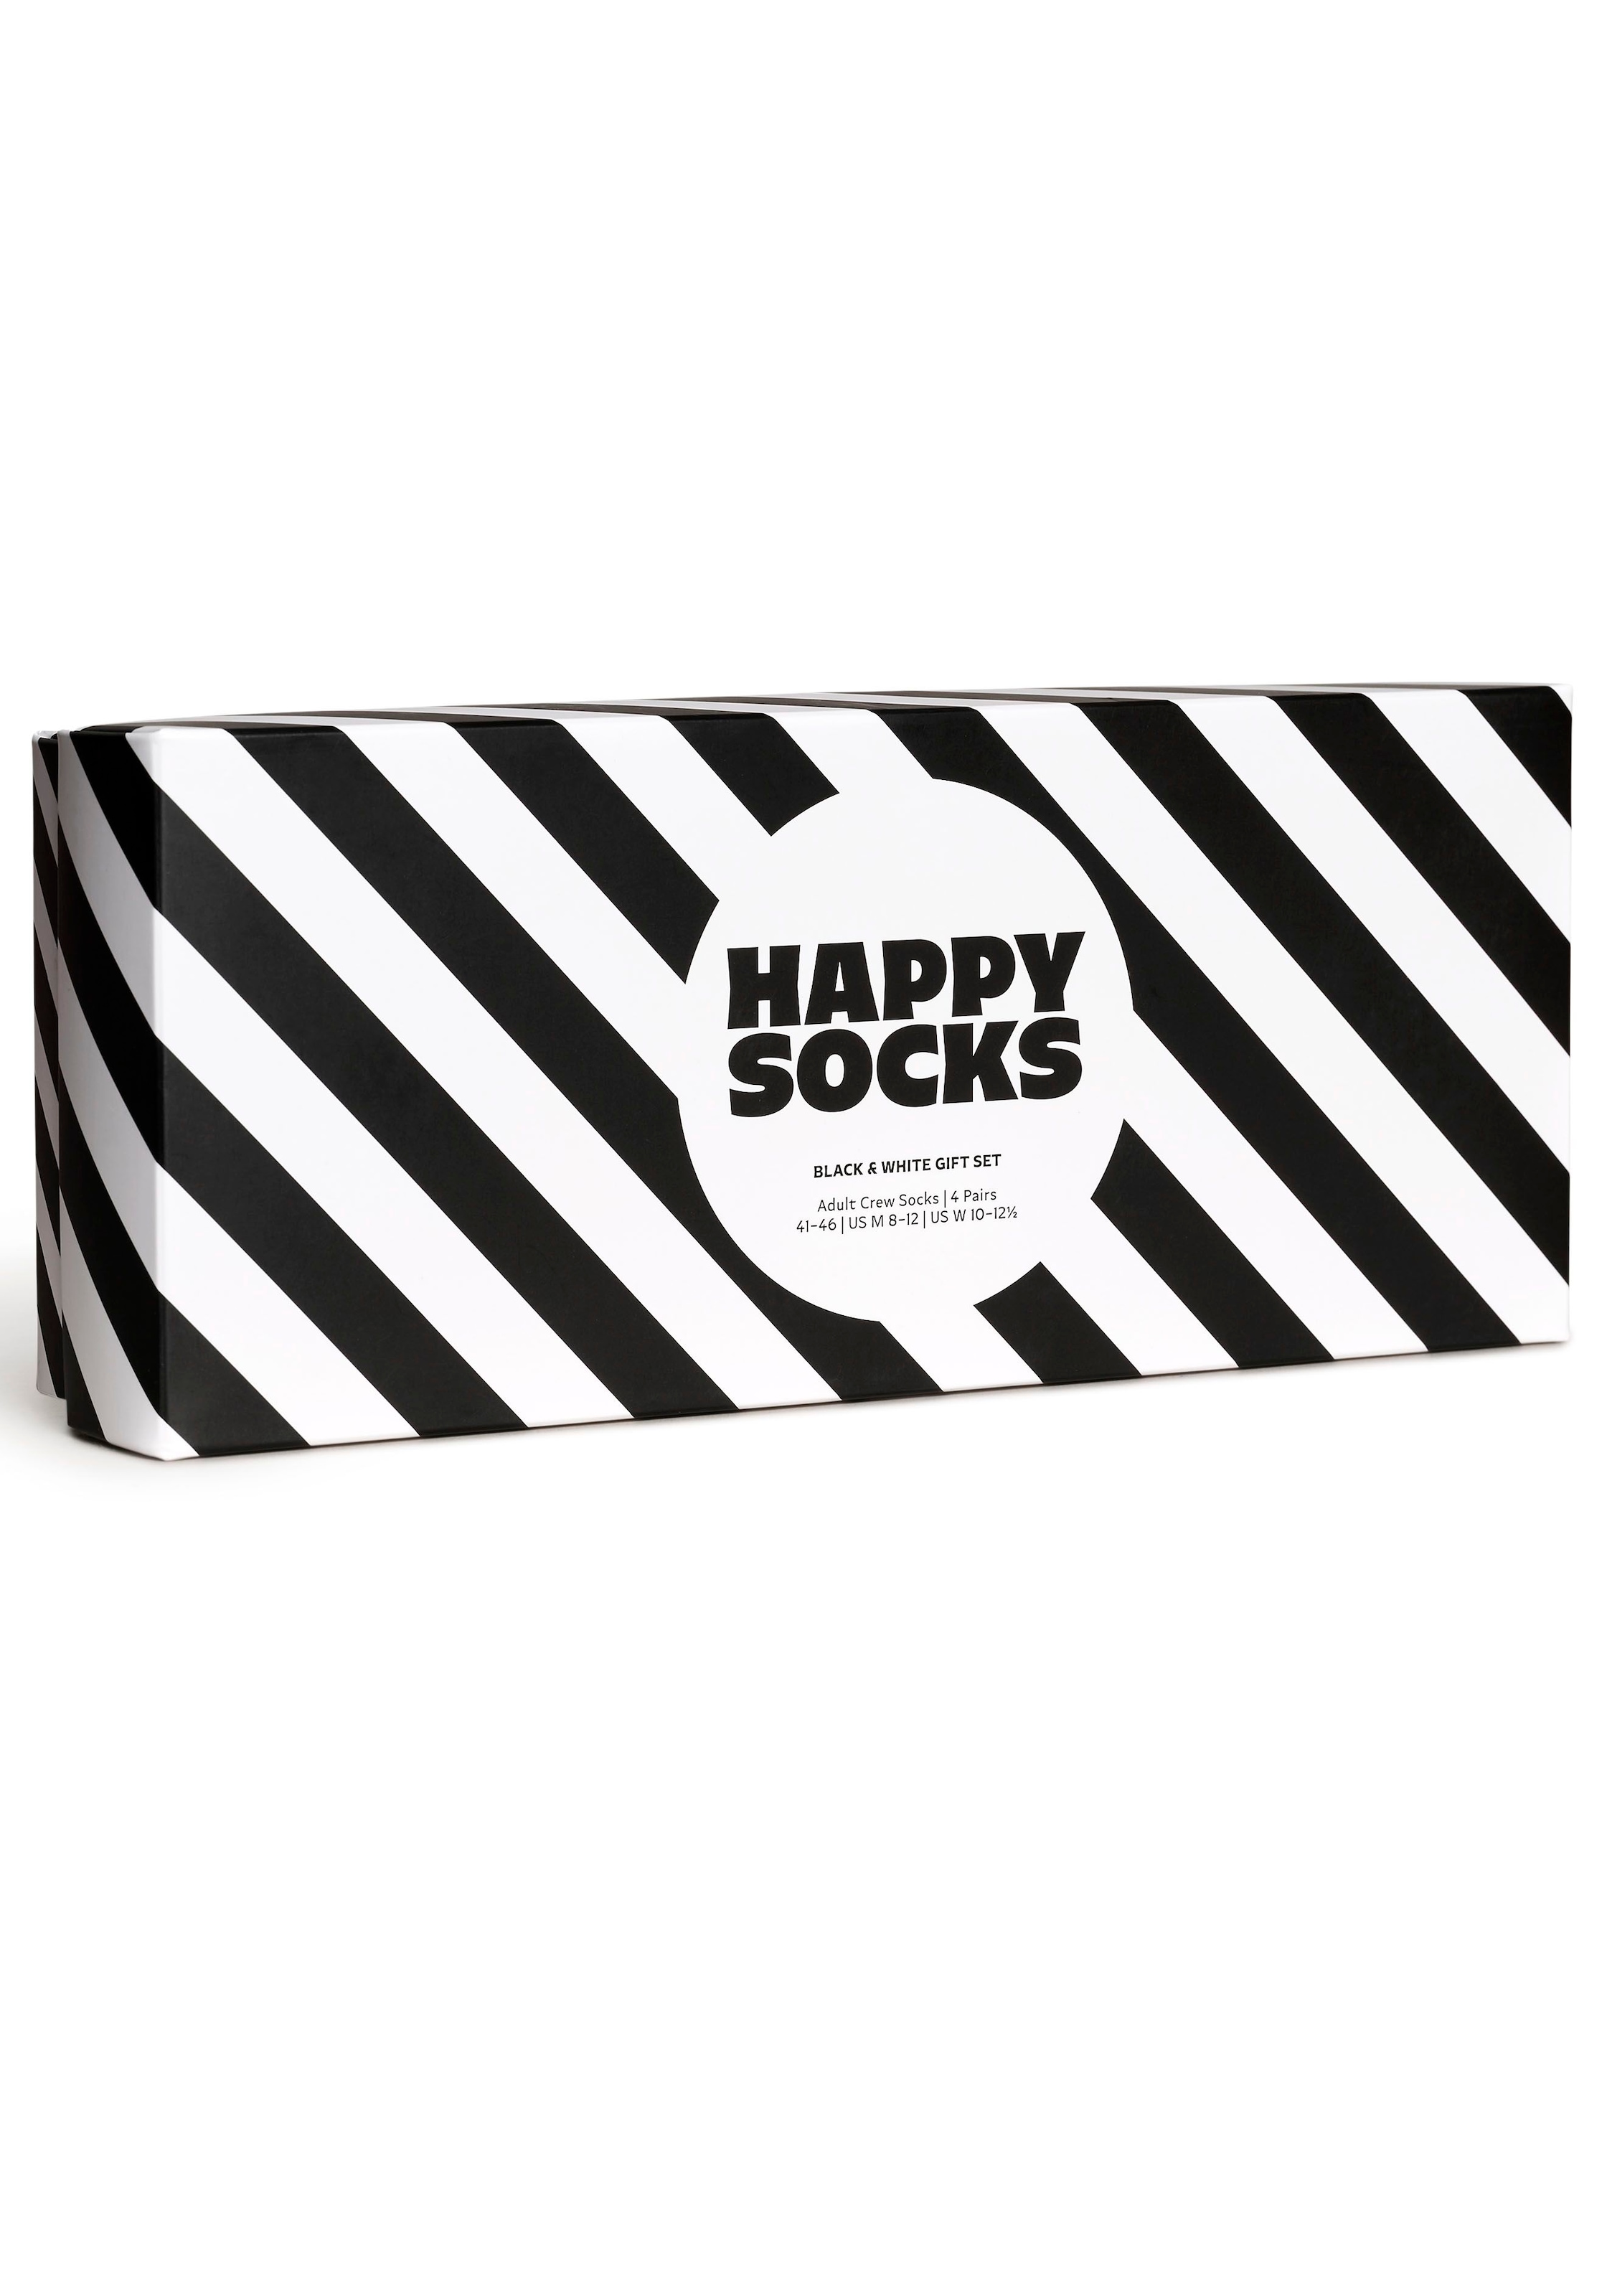 OTTO Socken, & Socks 4 Classic Black Socks Paar), Happy (Packung, bei White Set Gift kaufen